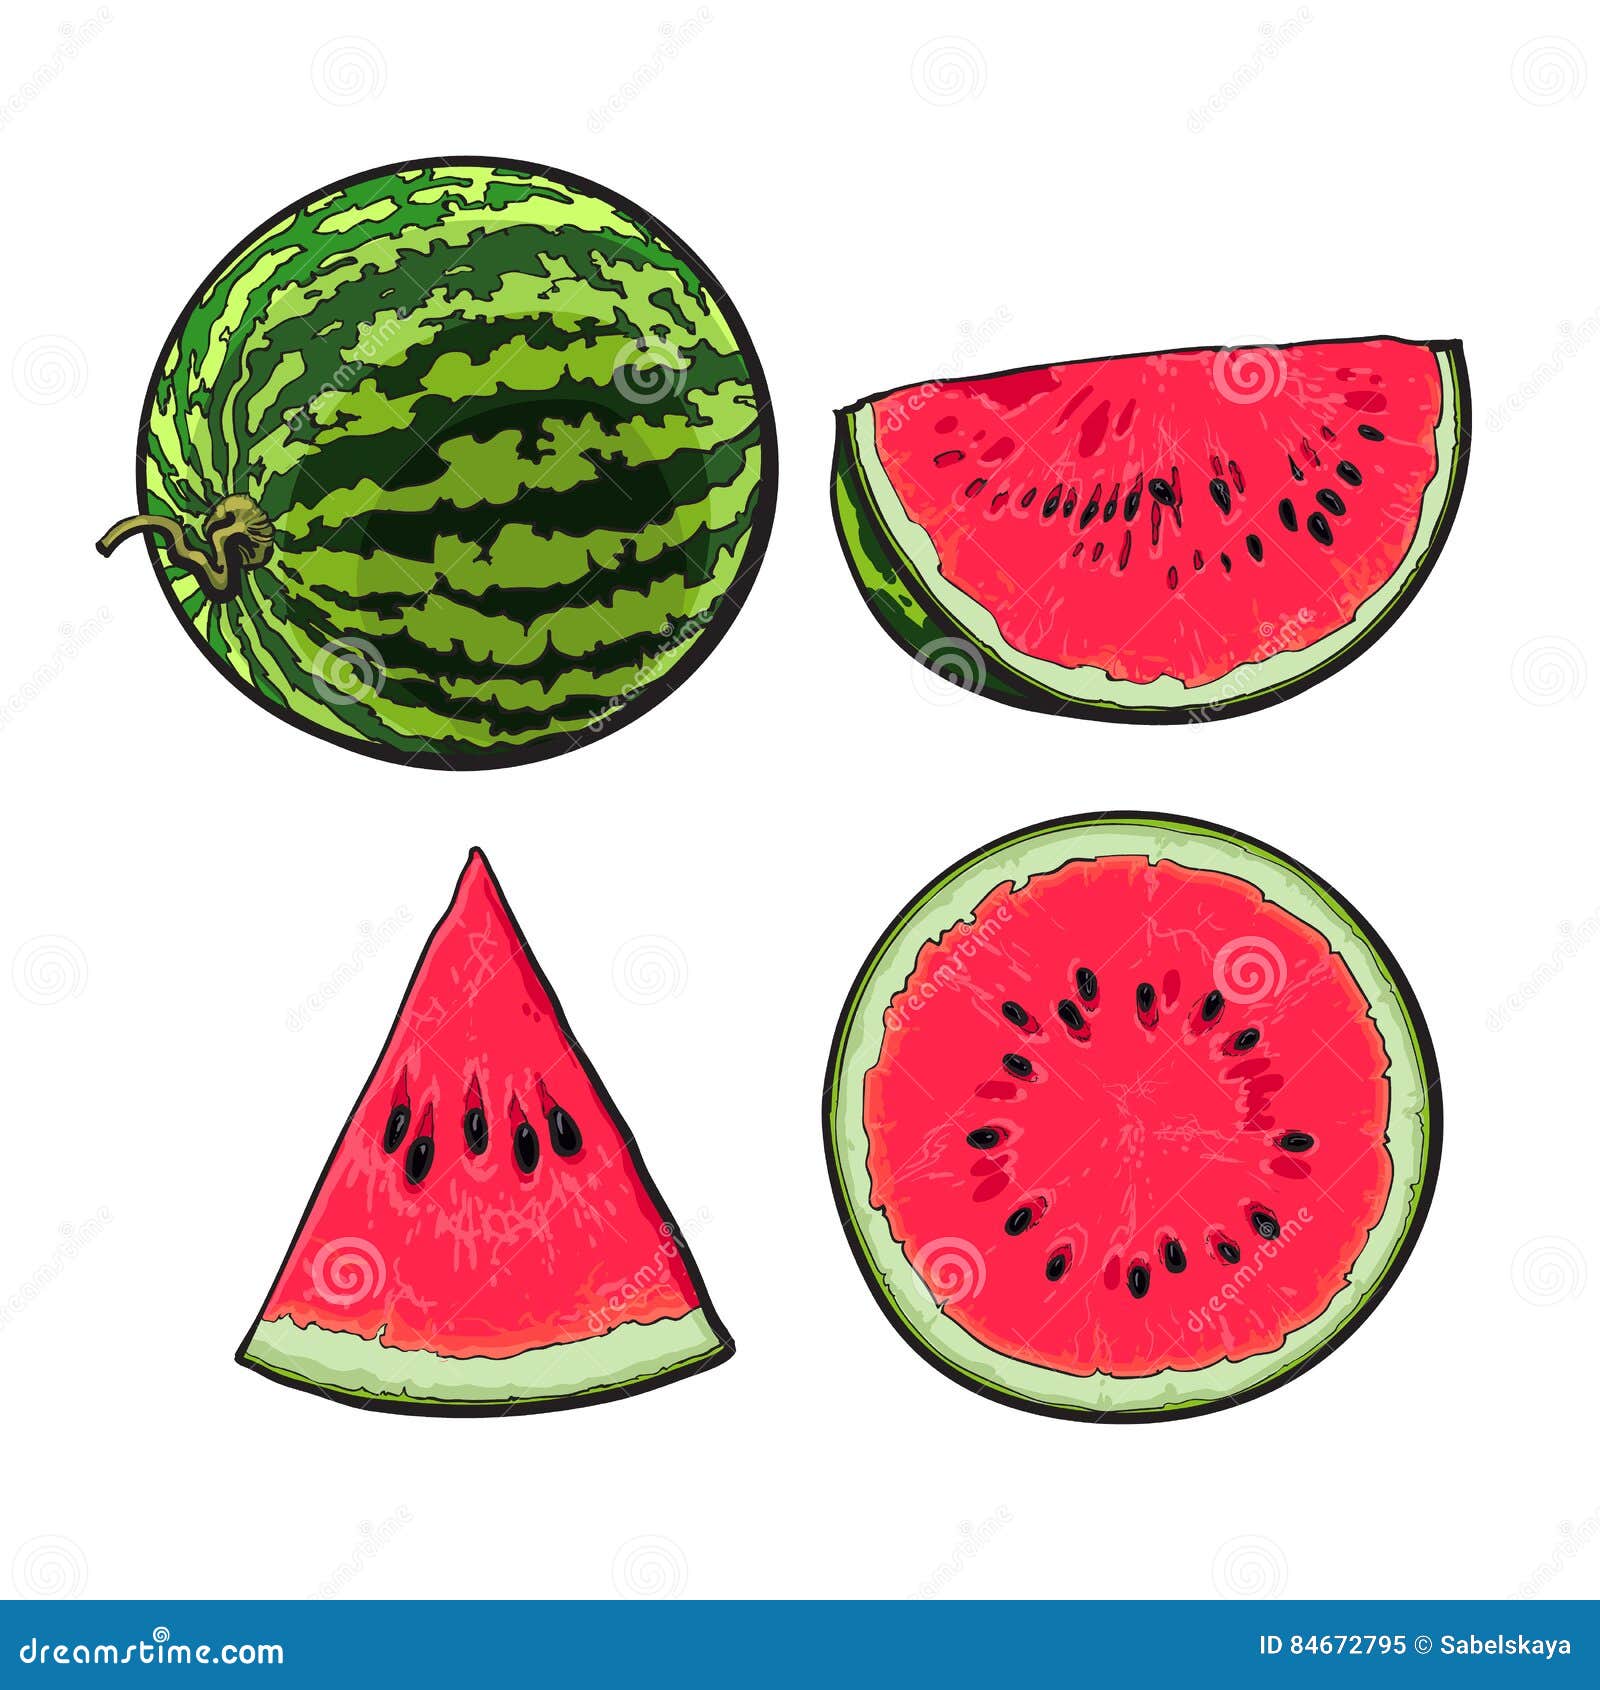 Whole green striped watermelon sketch - vector clip art